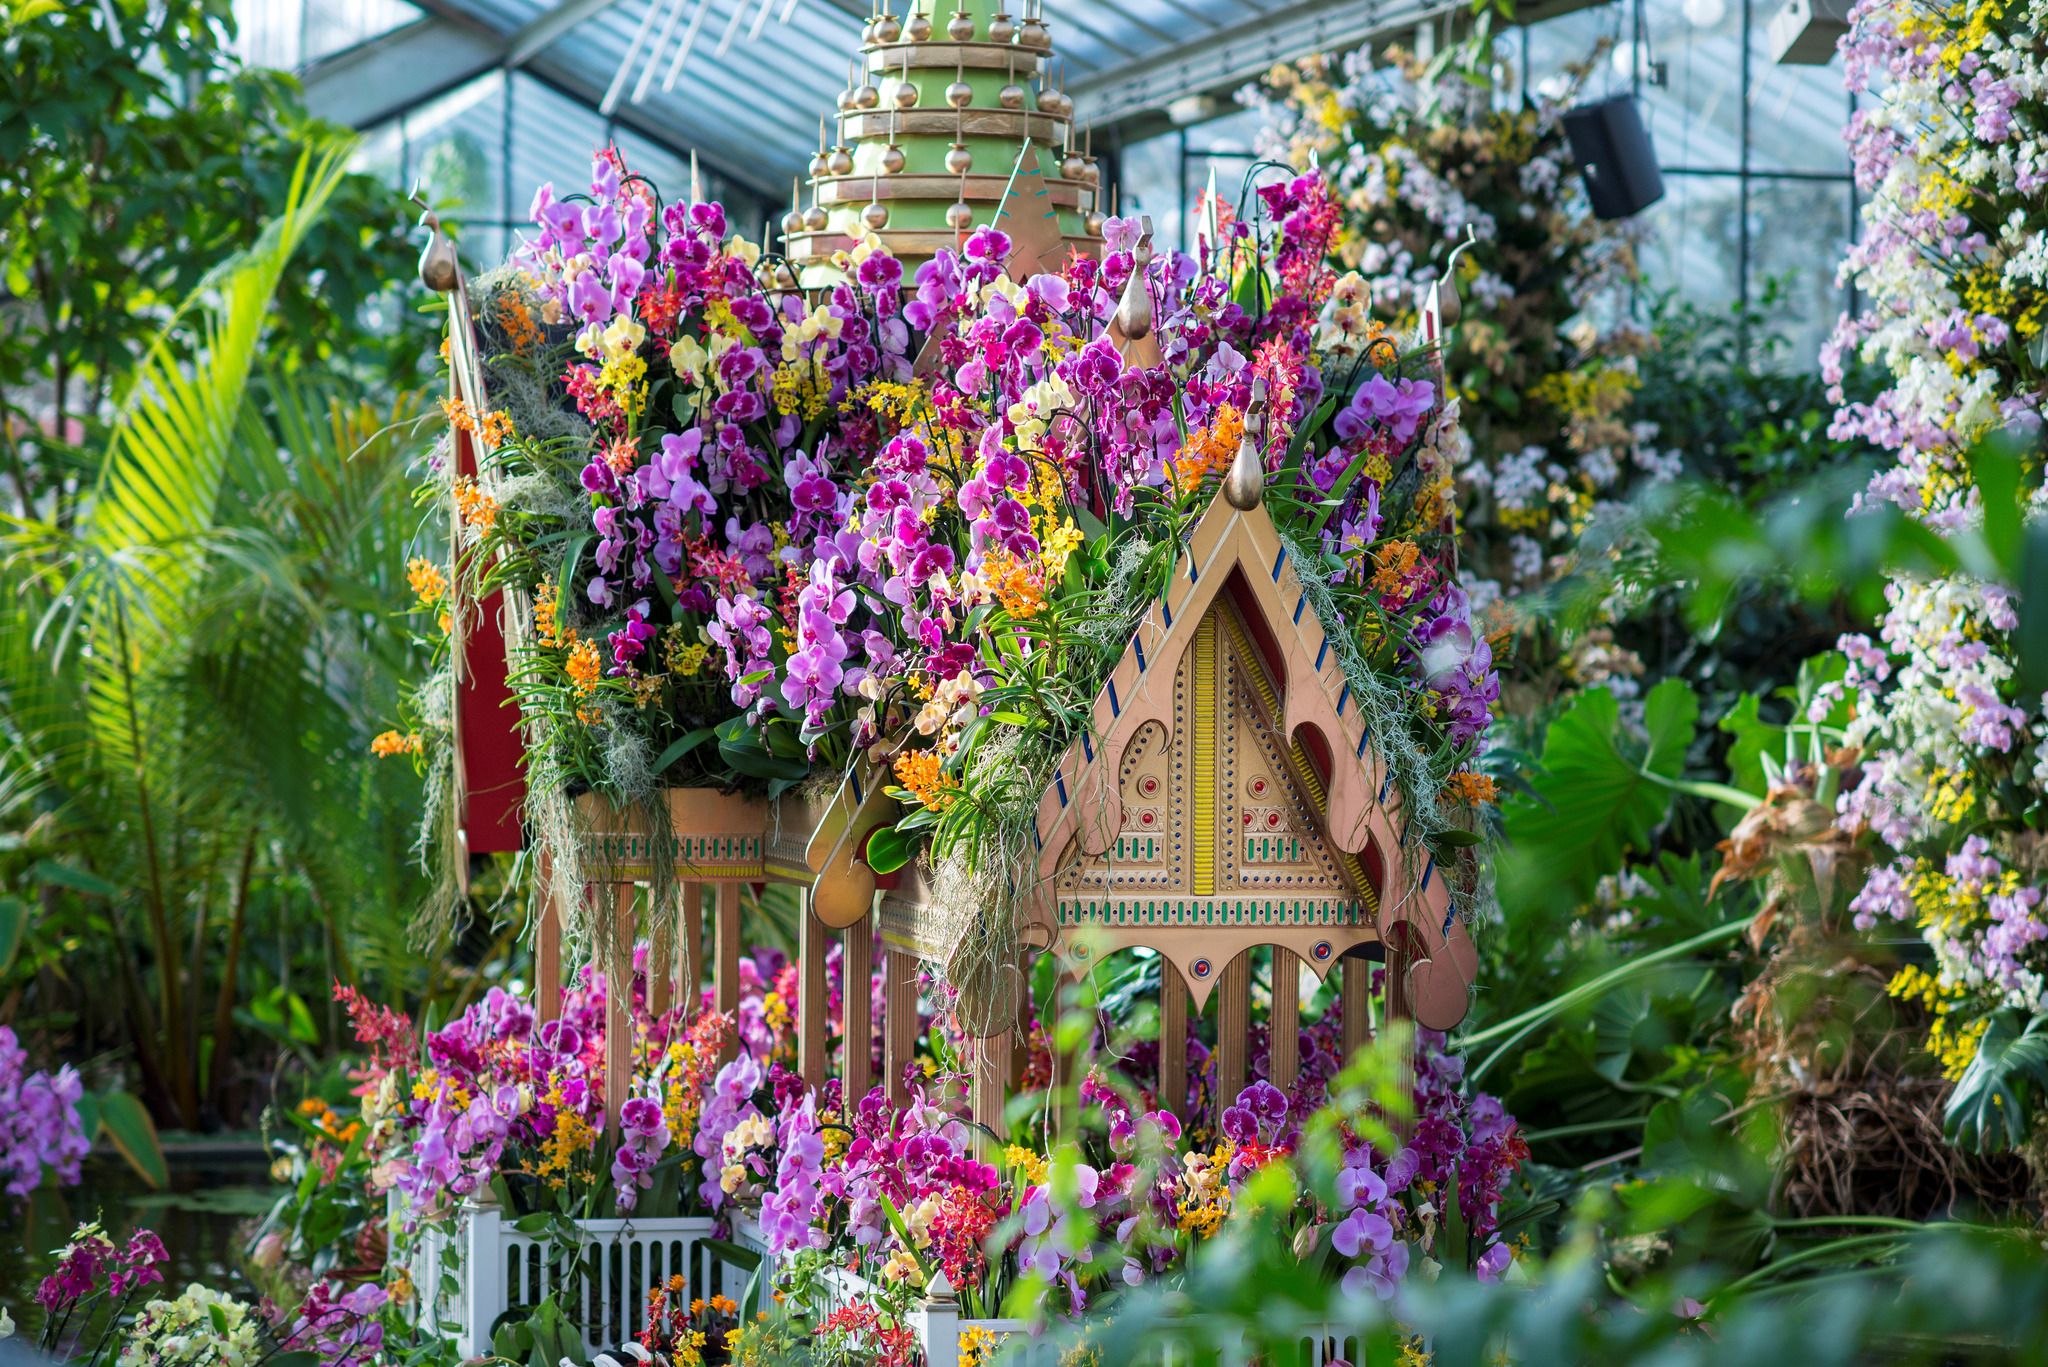 Kew Gardens Orchid Festival 2019 Dates and Tickets Info - Kew Gardens London